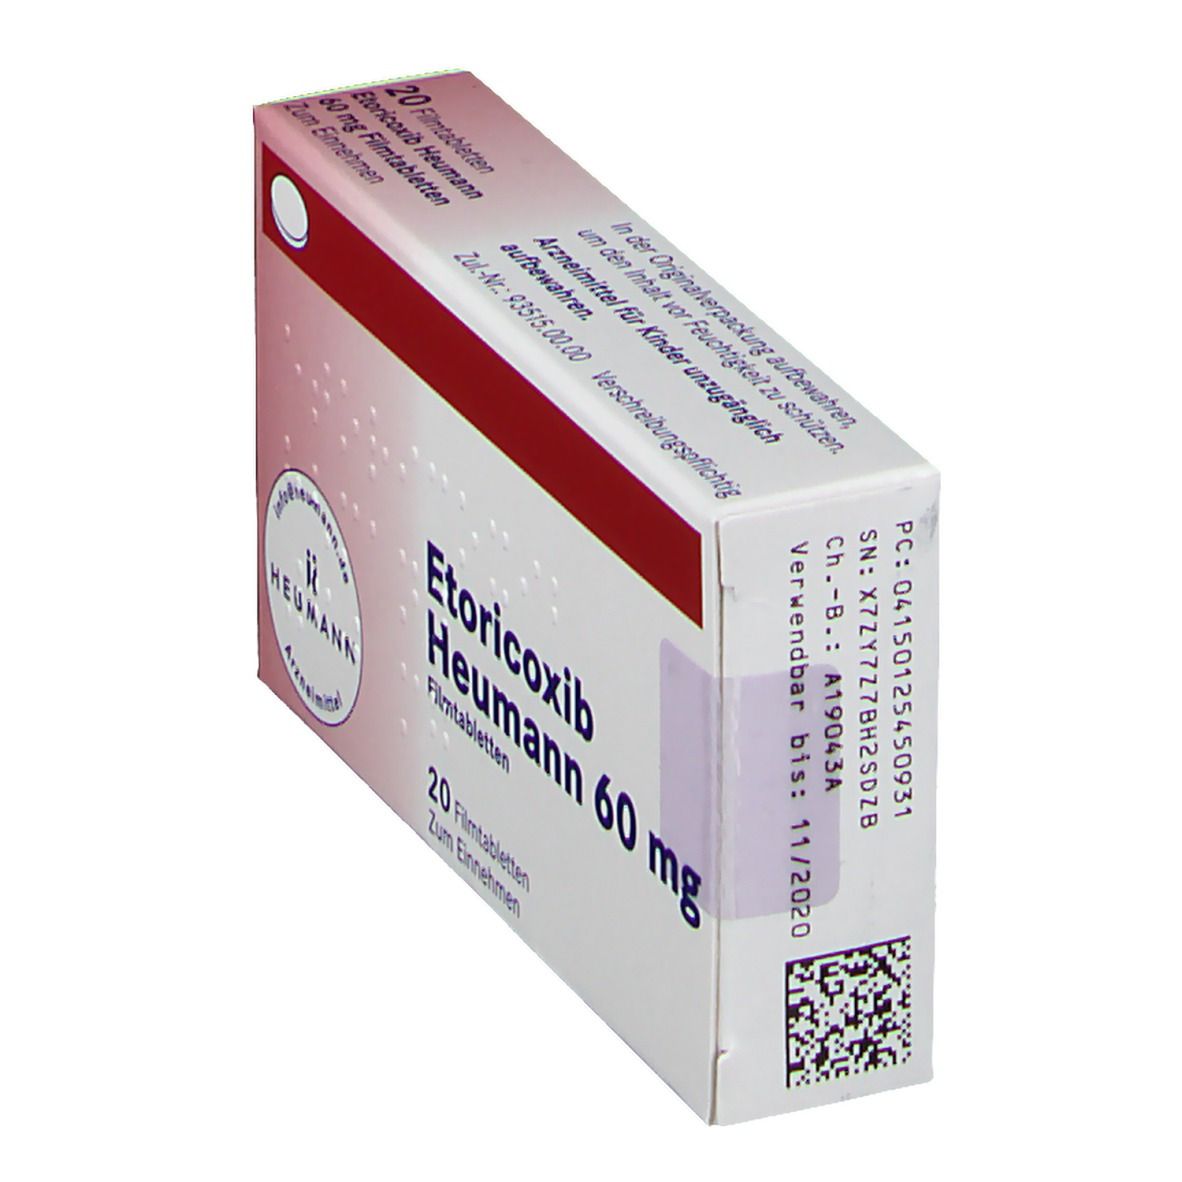 Etoricoxib Heumann 60 mg